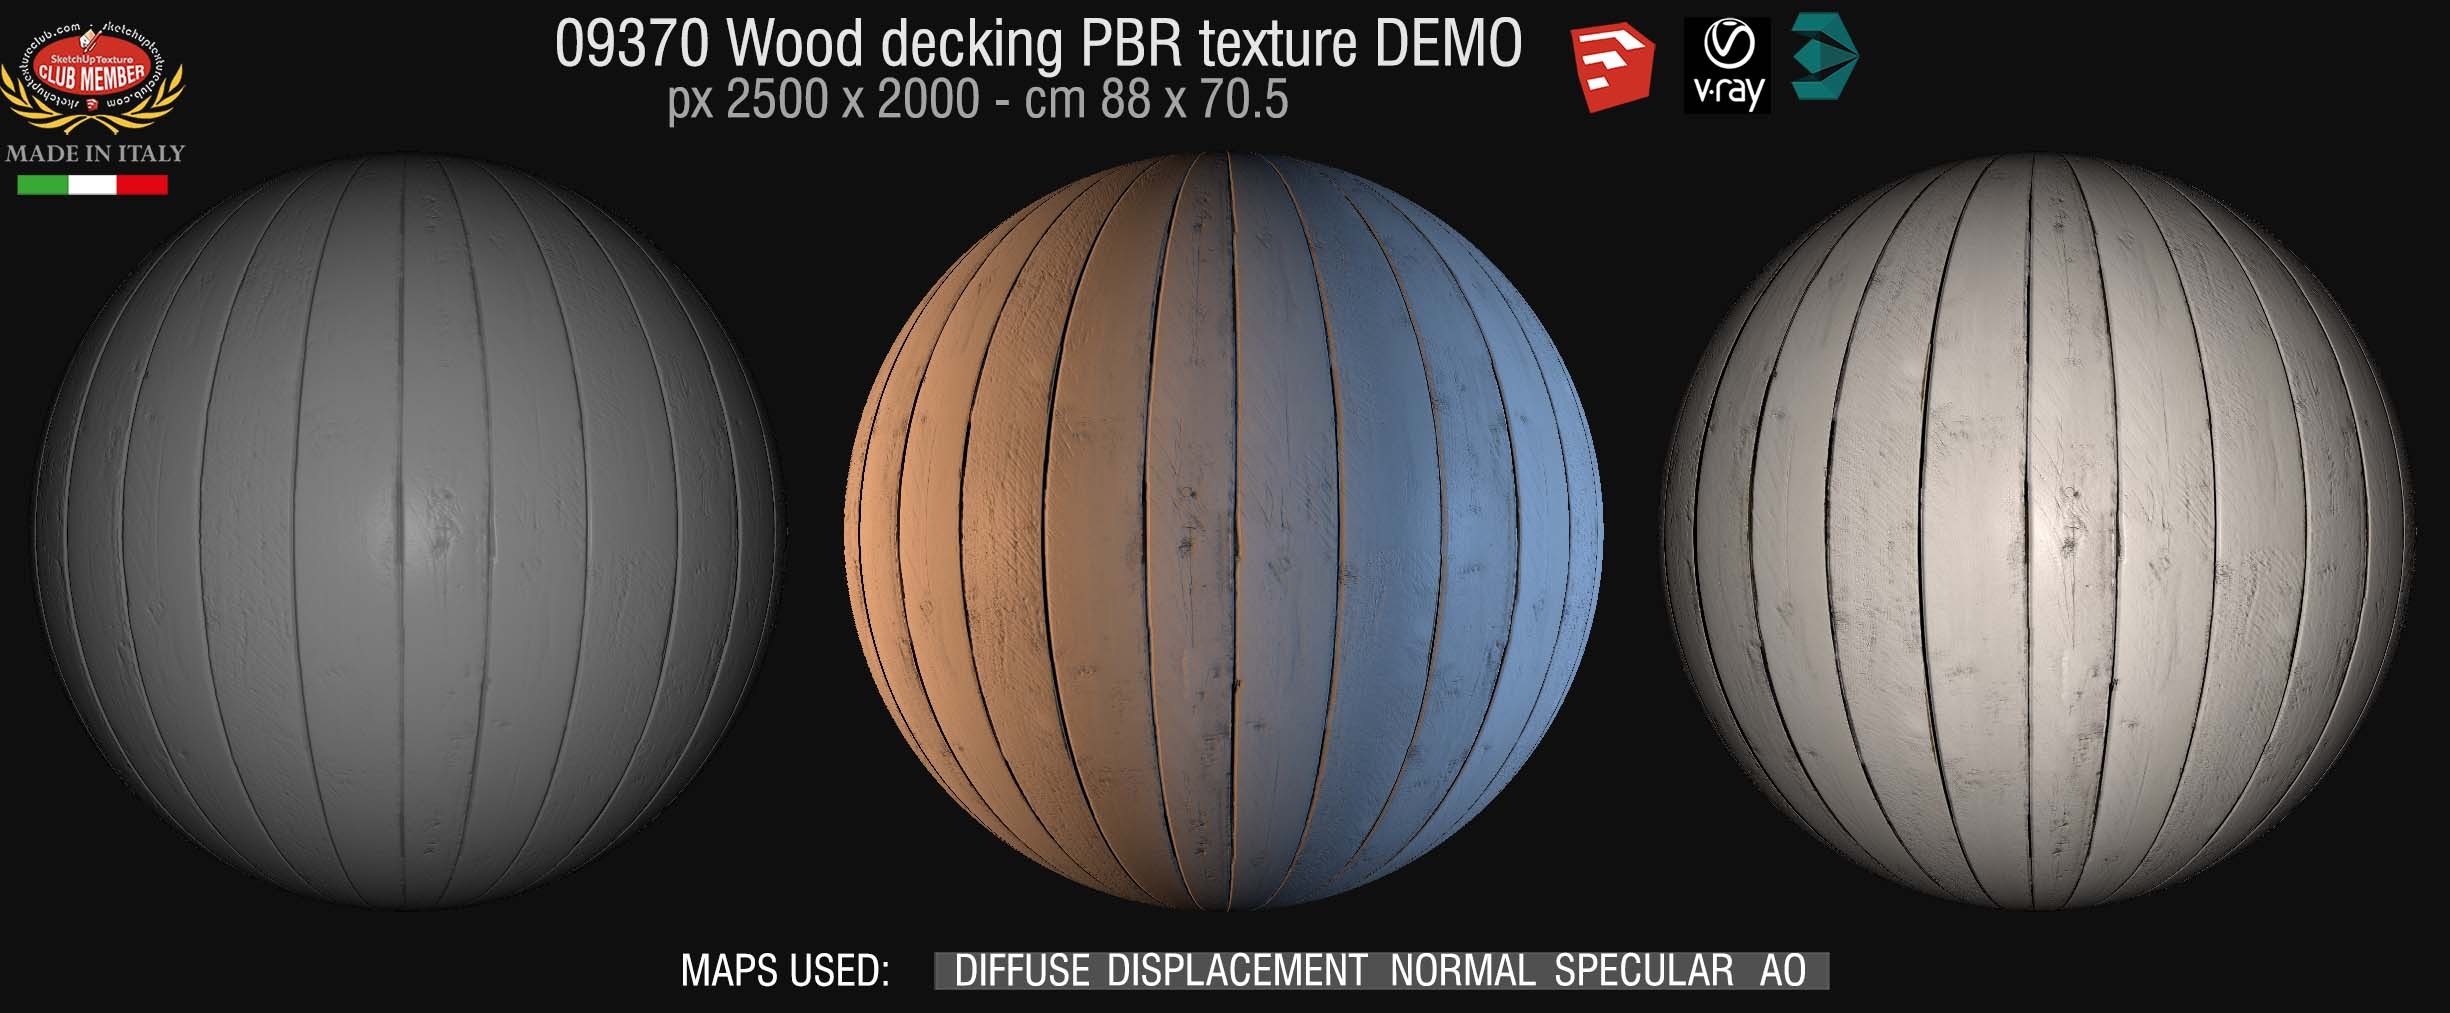 09370 Wood decking PBR texture seamless DEMO